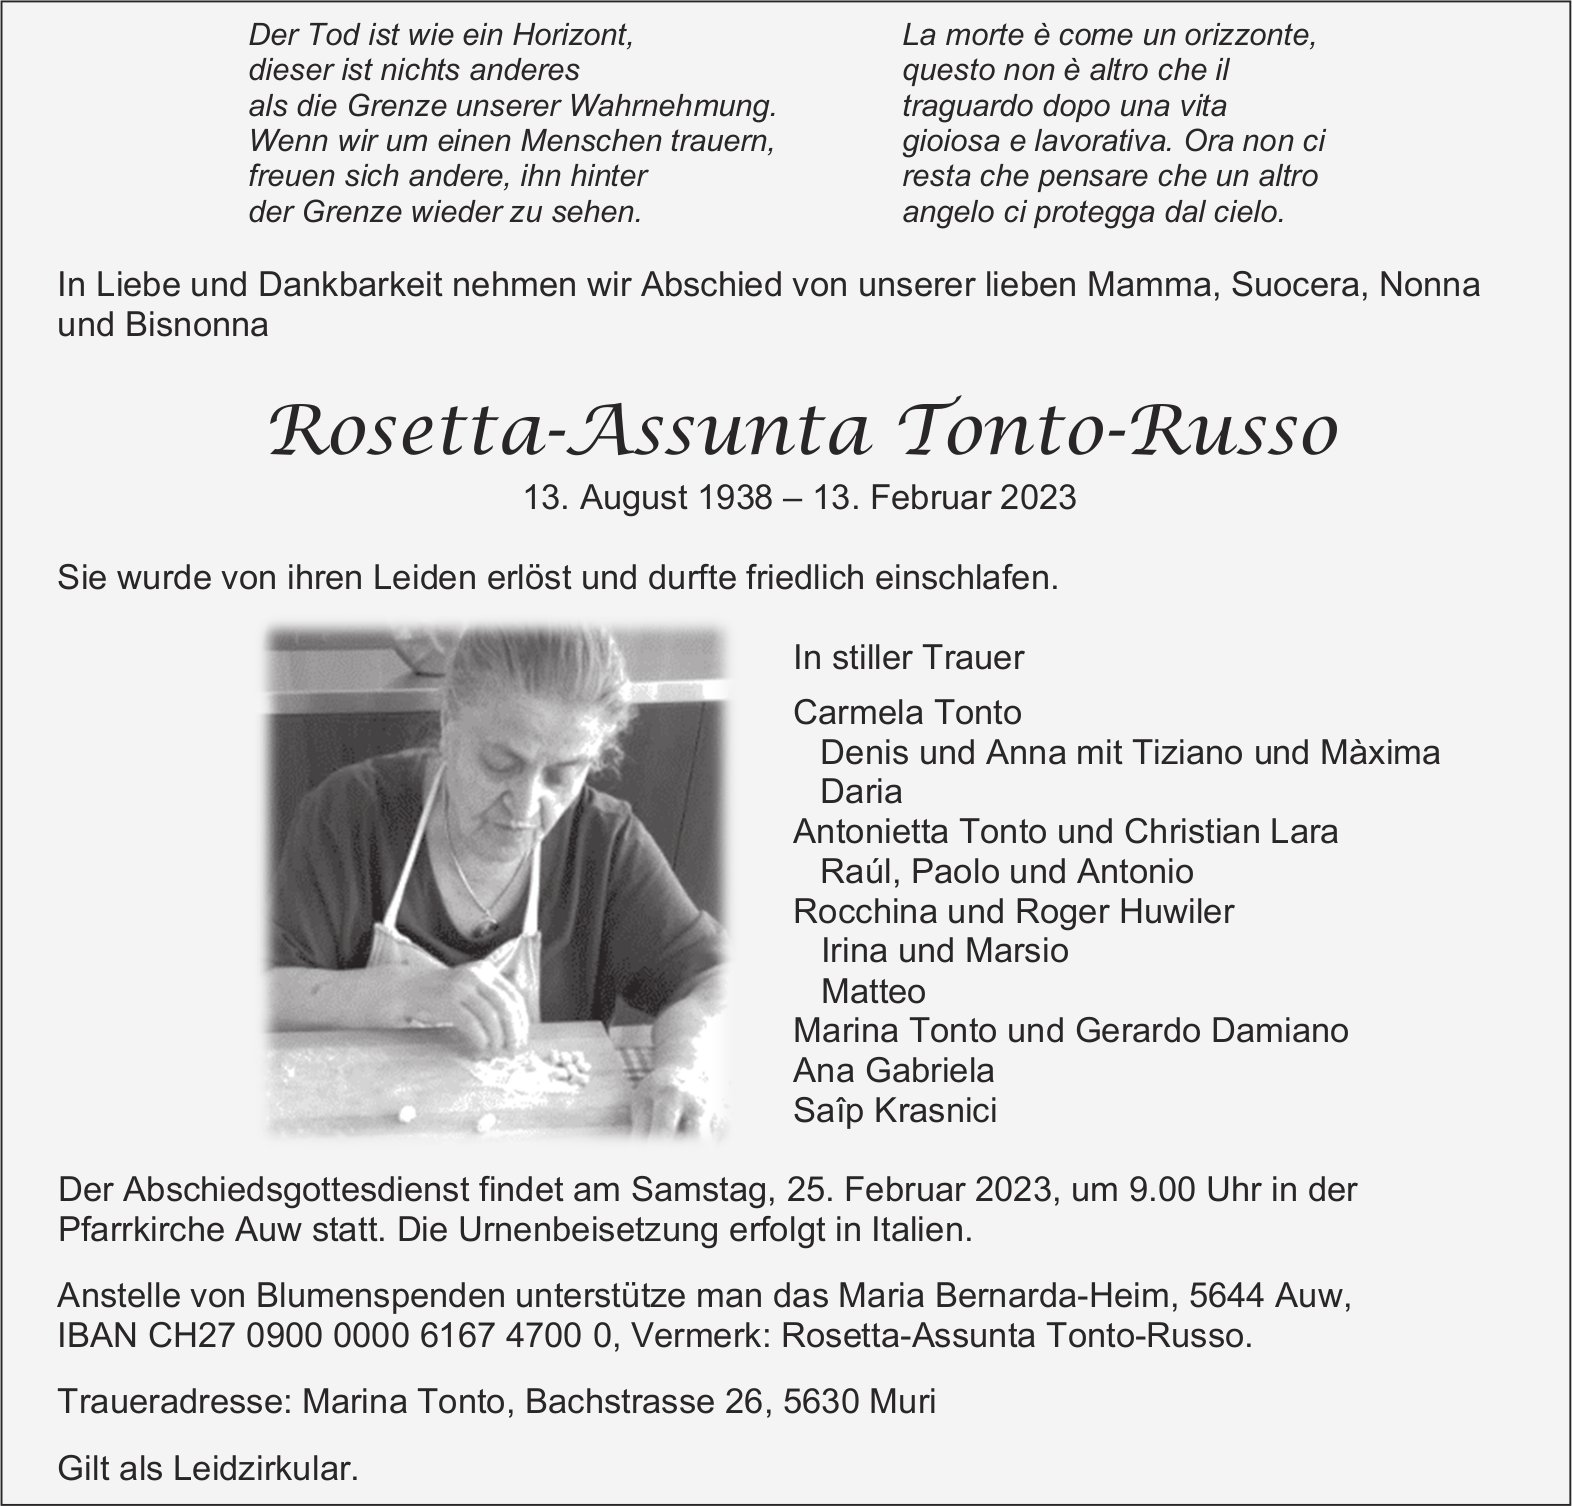 Tonto-Russo Rosetta-Assunta, Februar 2023 / TA